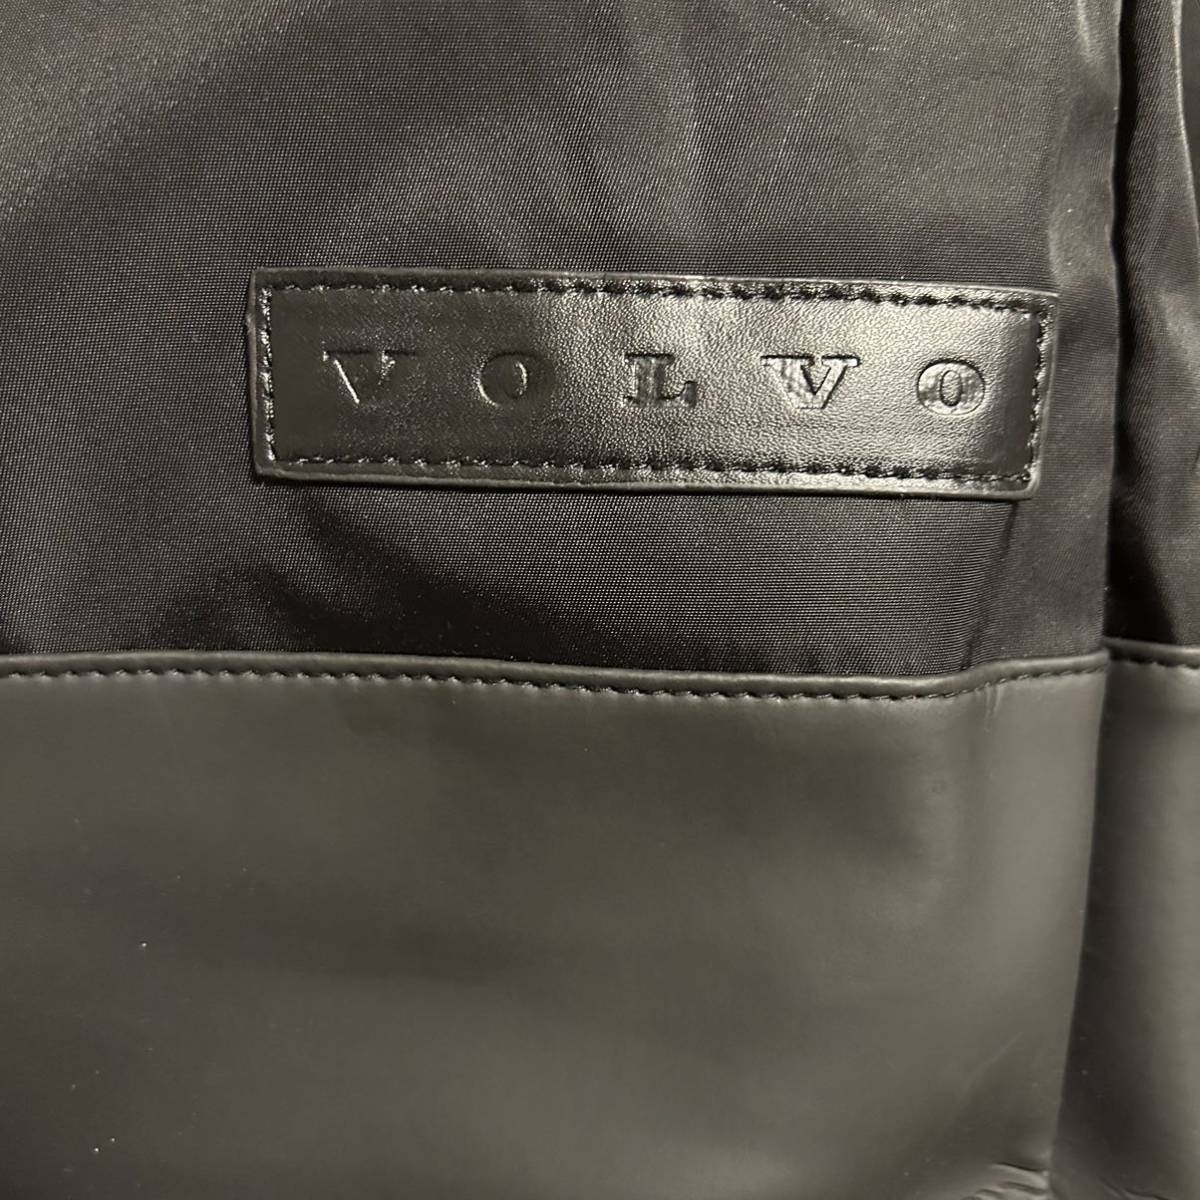  не использовался * Volvo VOLVO оригинал рюкзак задний рюкзак чёрный / черный оригинальный Novelty *